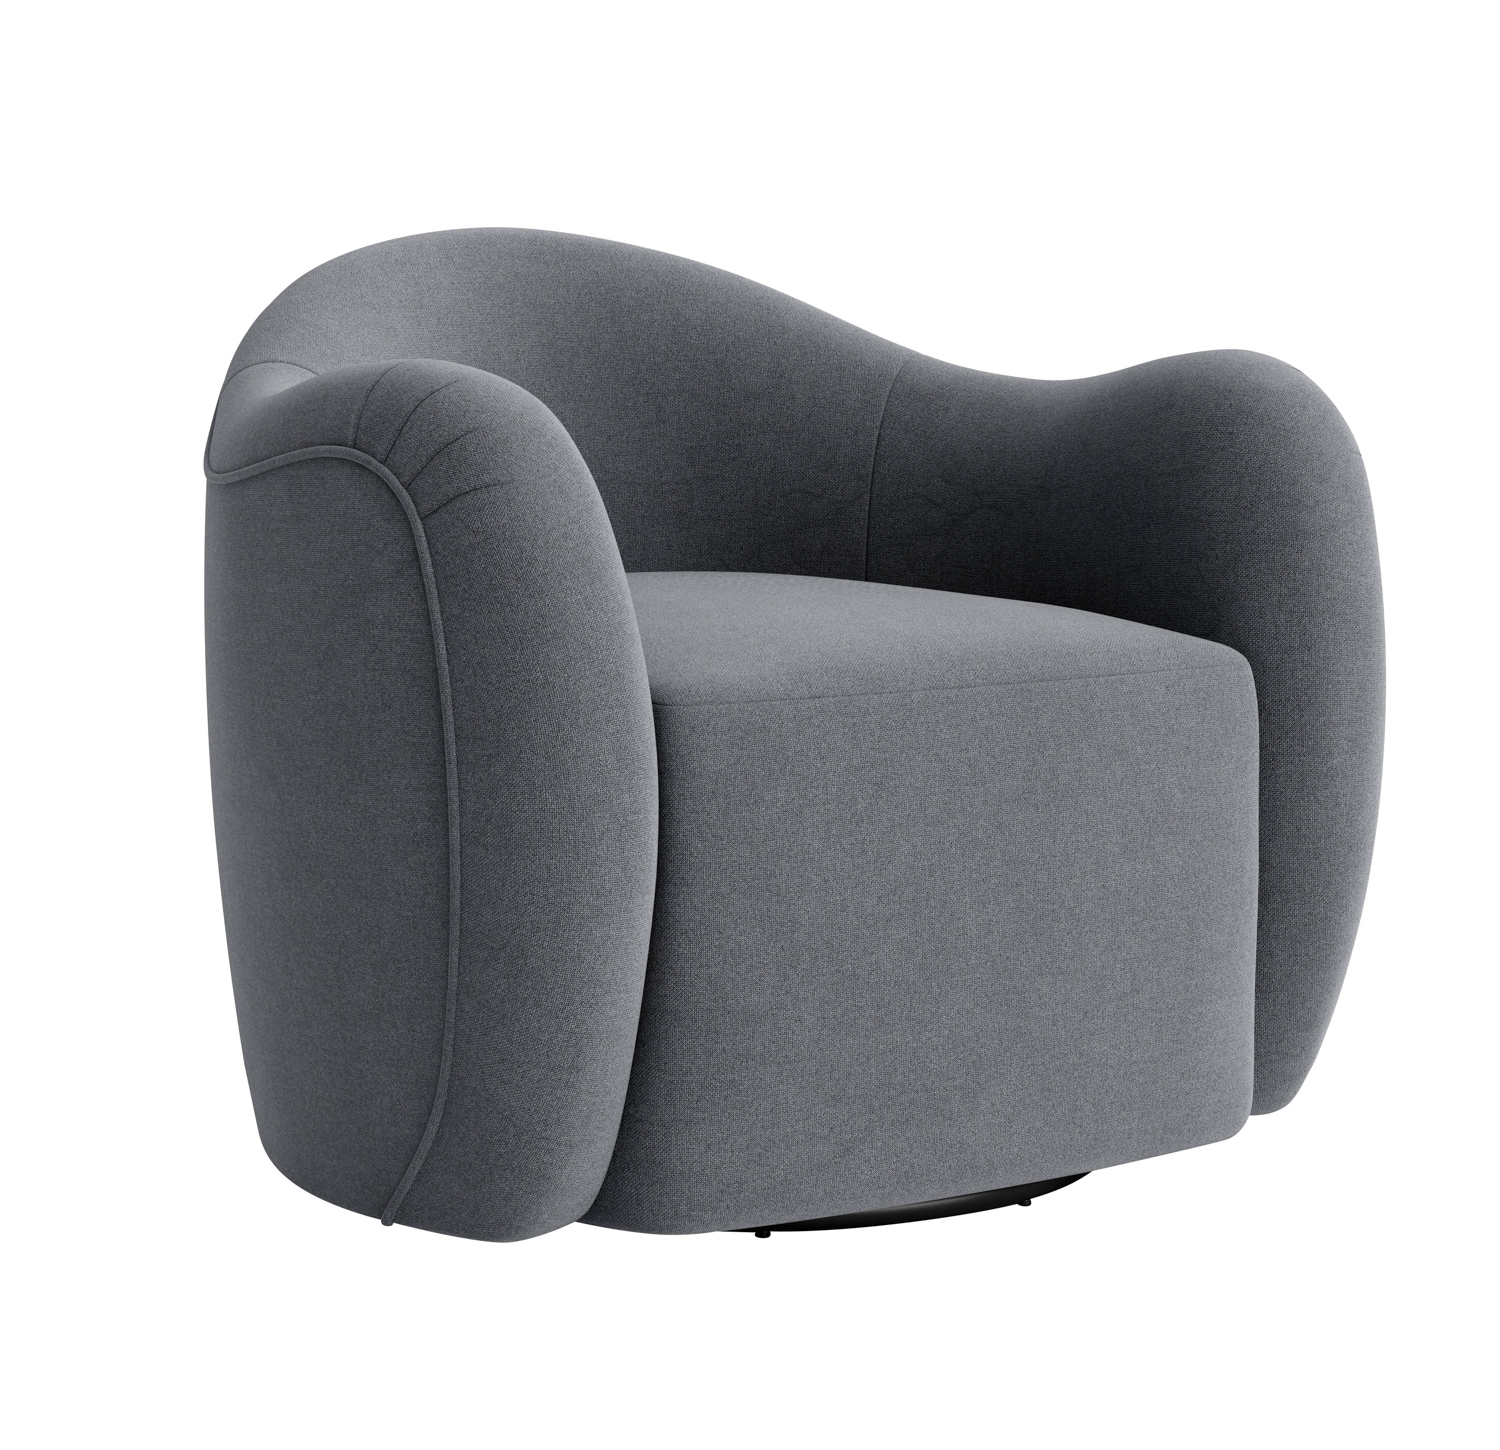 A curvy, grey armchair for Mitchell Gold + Bob Williams